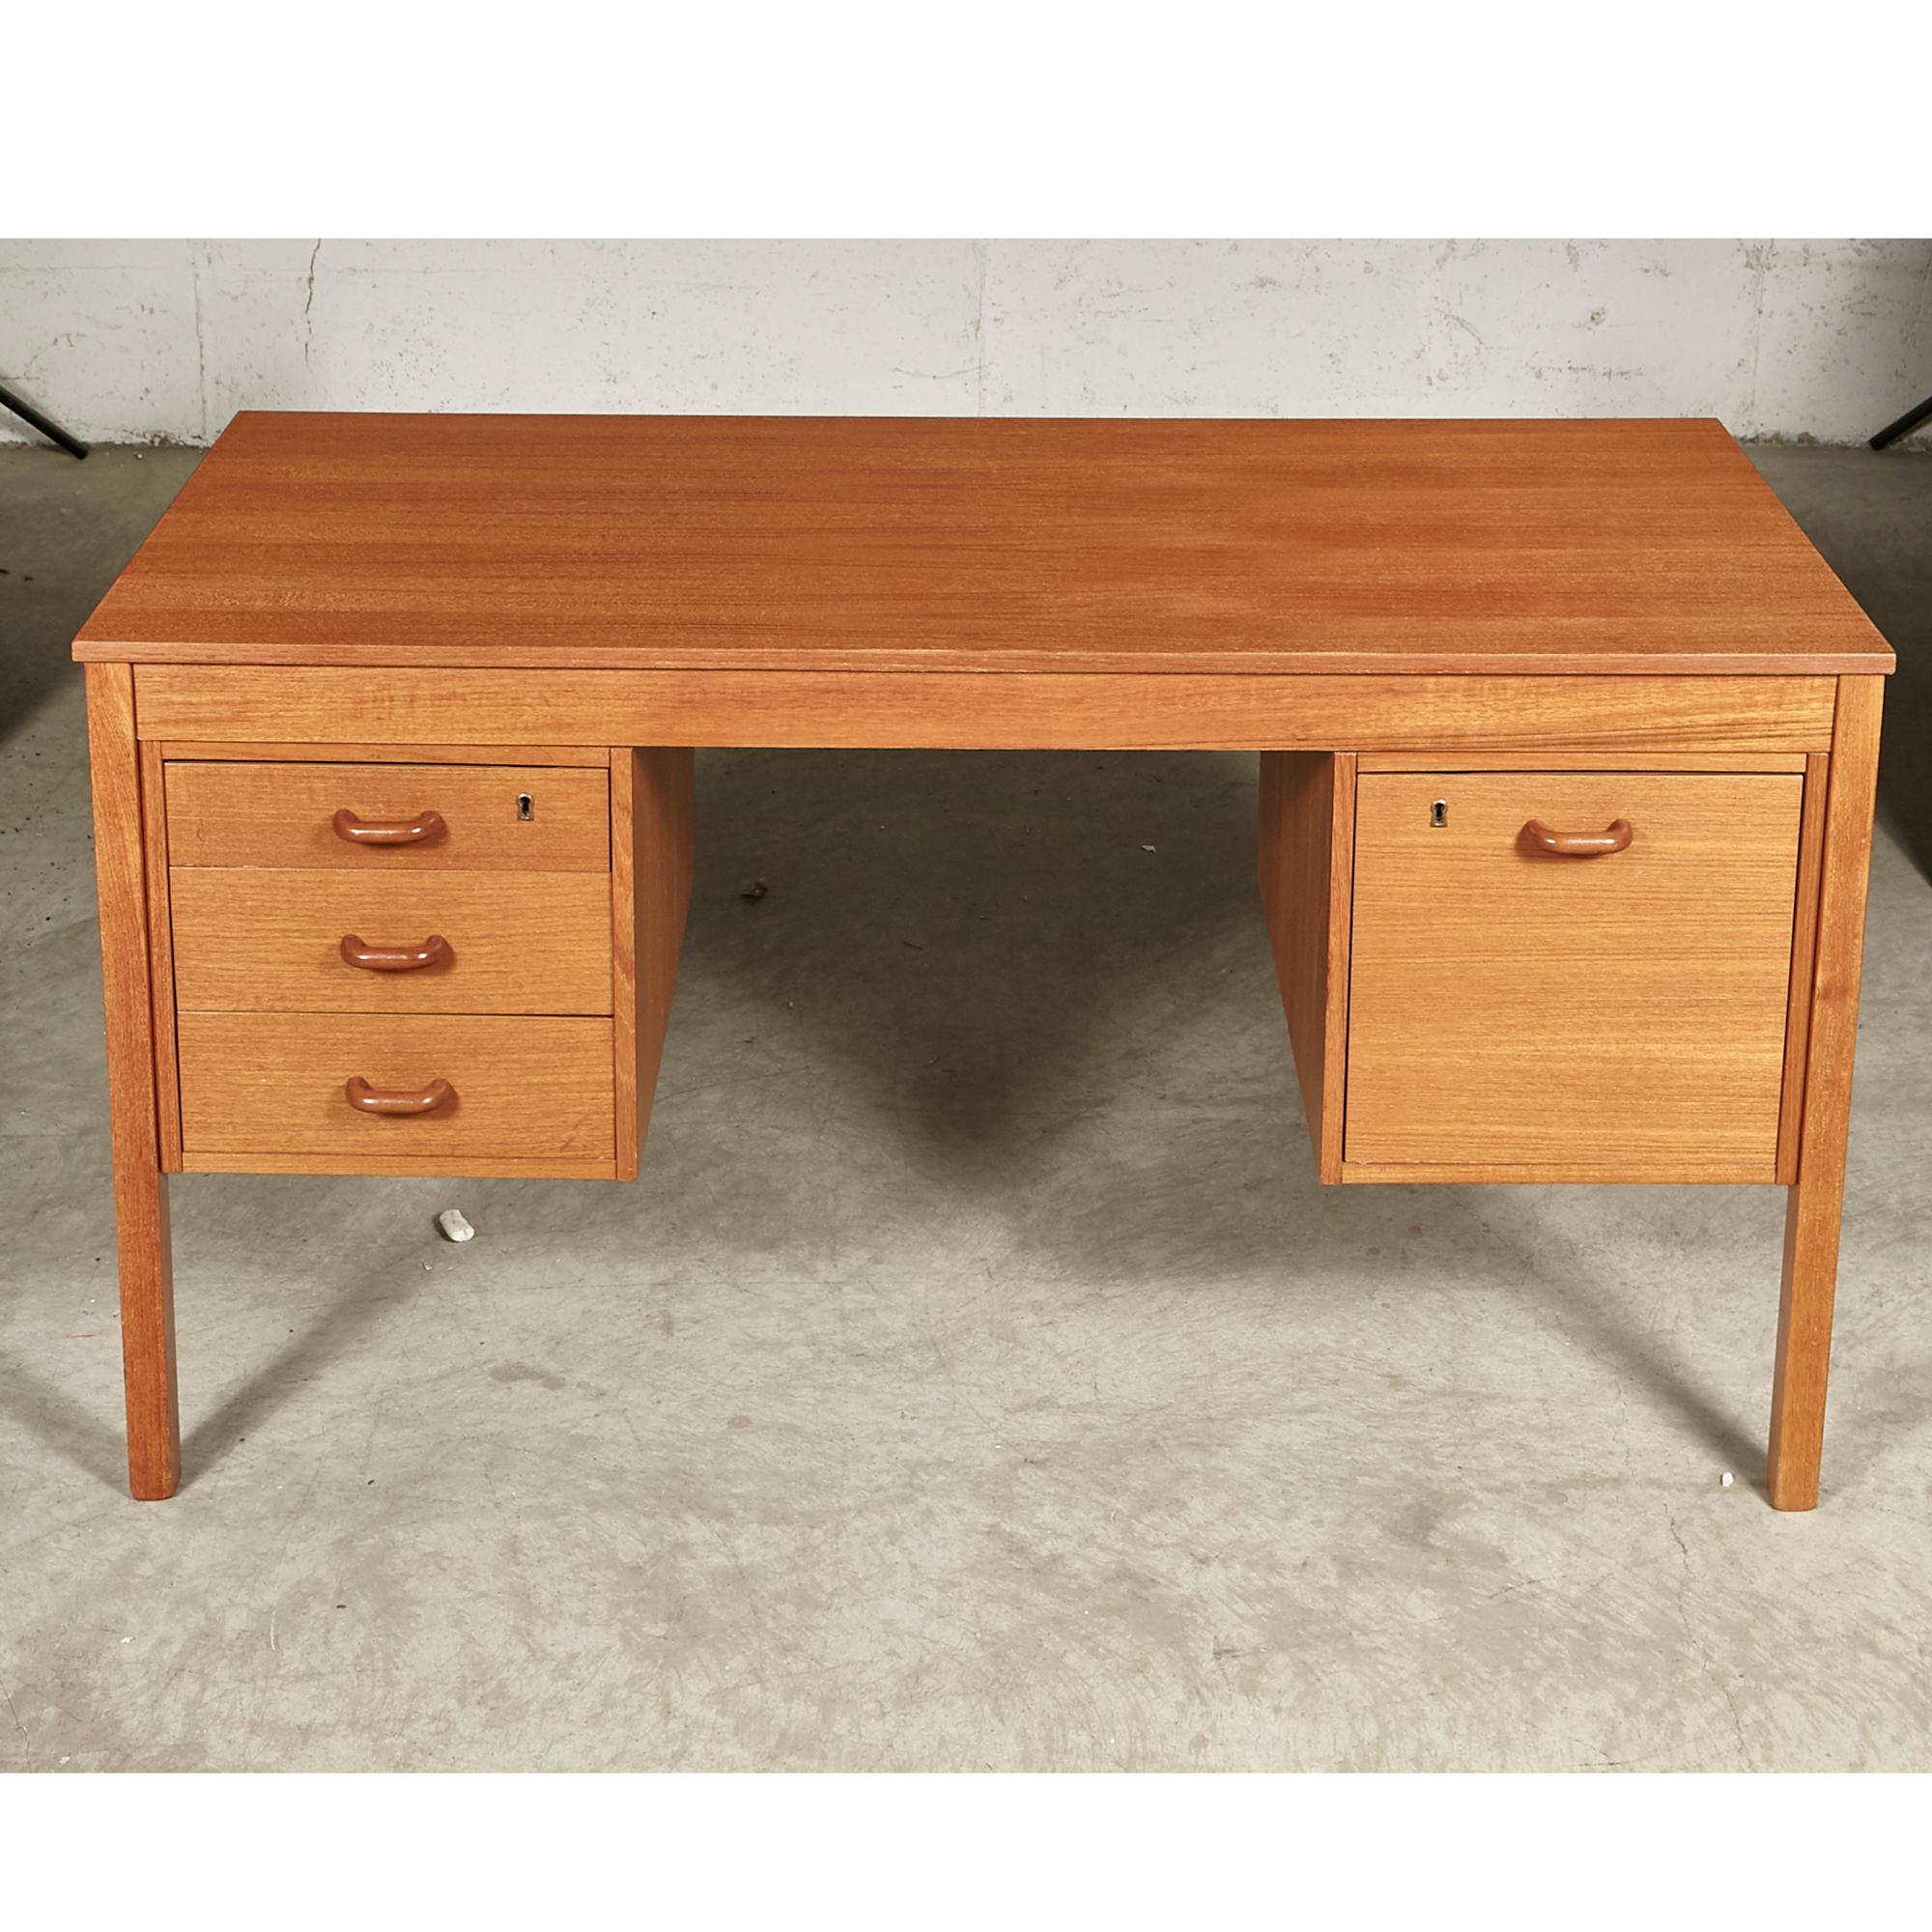 1970s Danish teak desk with four drawers for storage. Desk has rounded teak pulls. Desk opening: 20